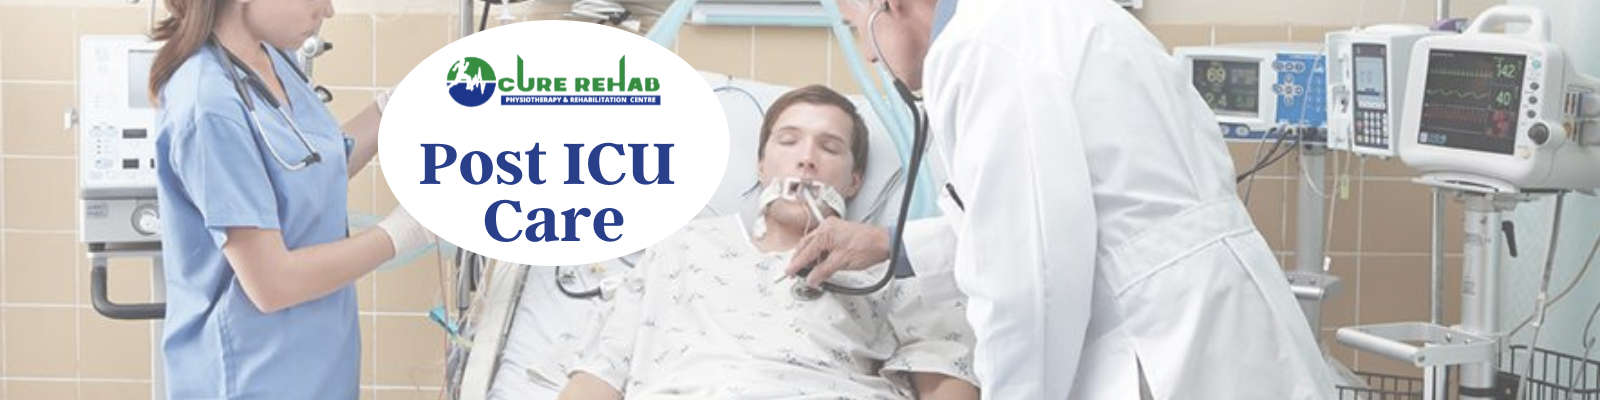 Post ICU Care